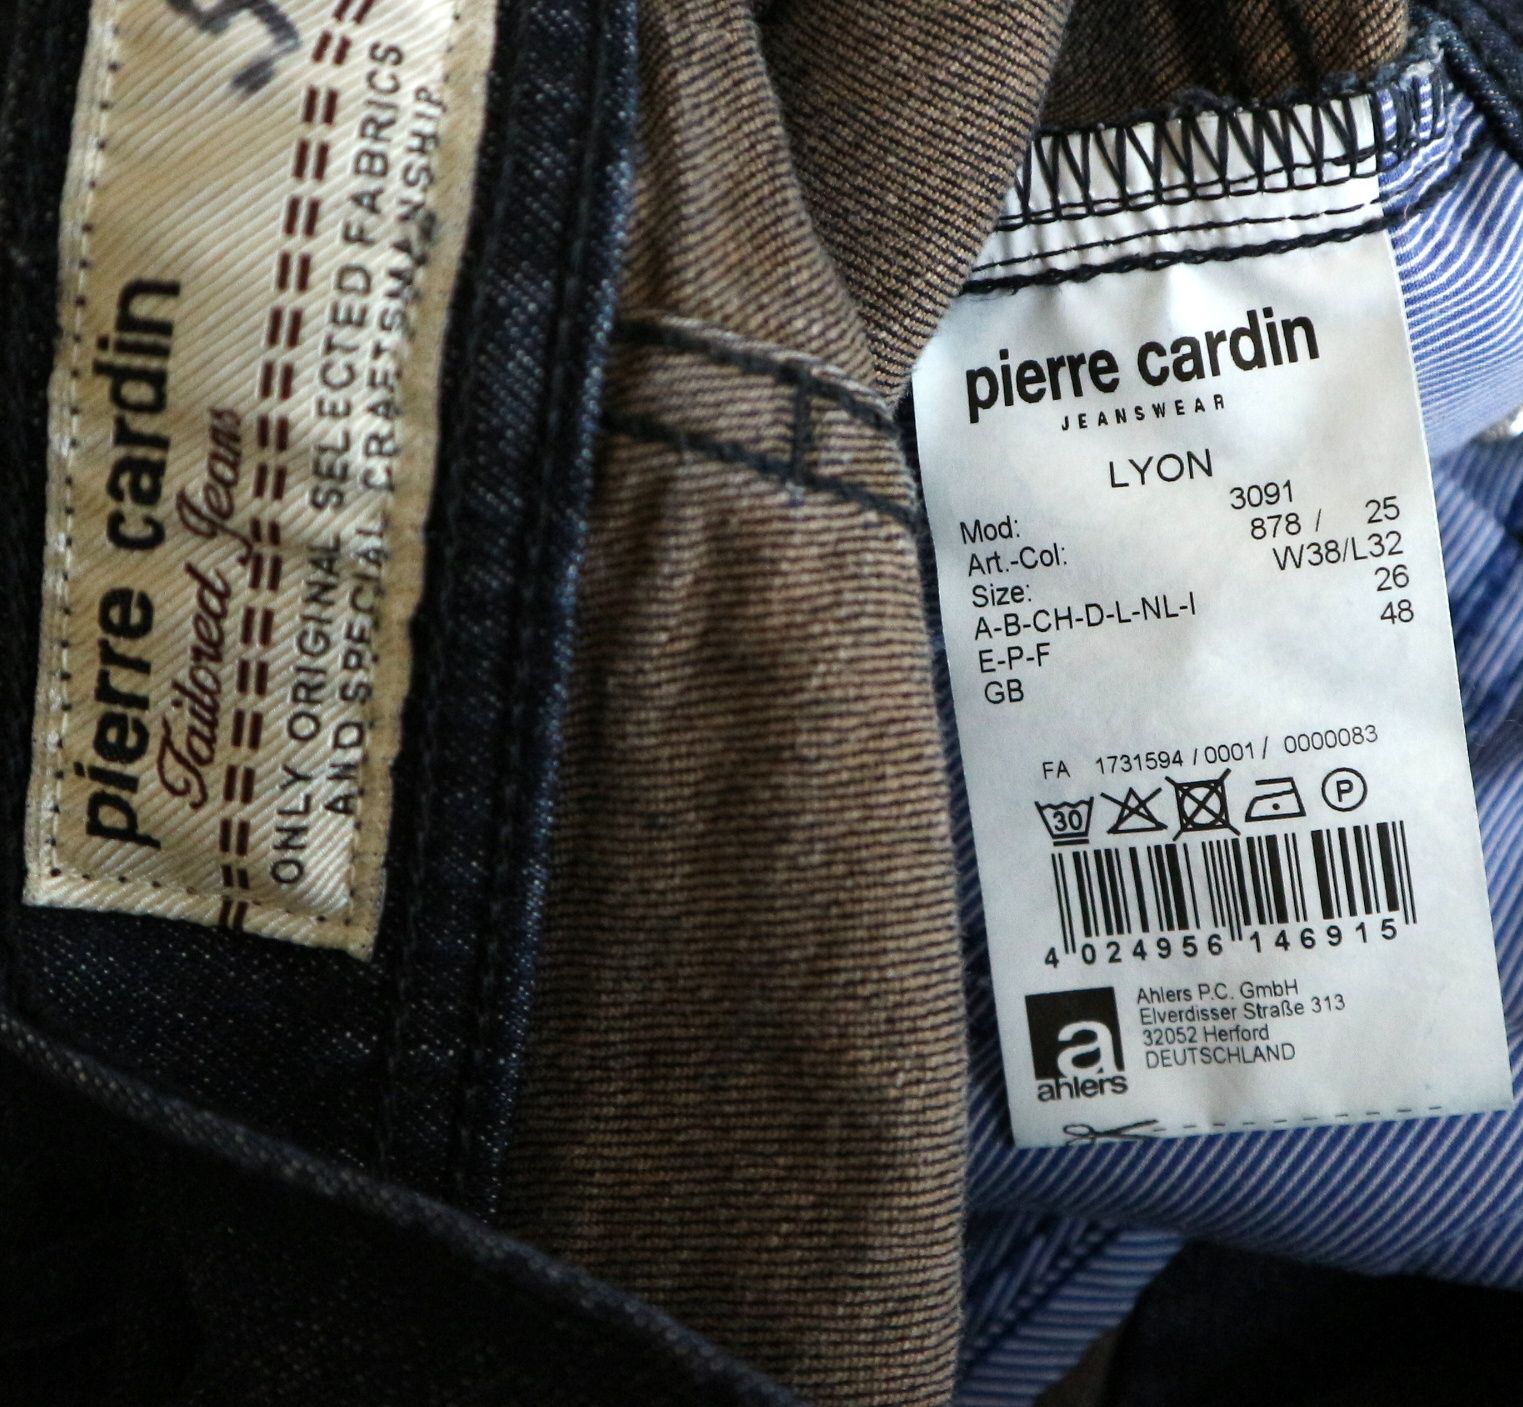 Pierre Cardin Pierre Cardin Lyon Fit jeans W38 L32 Size US 38 / EU 54 - 8 Preview